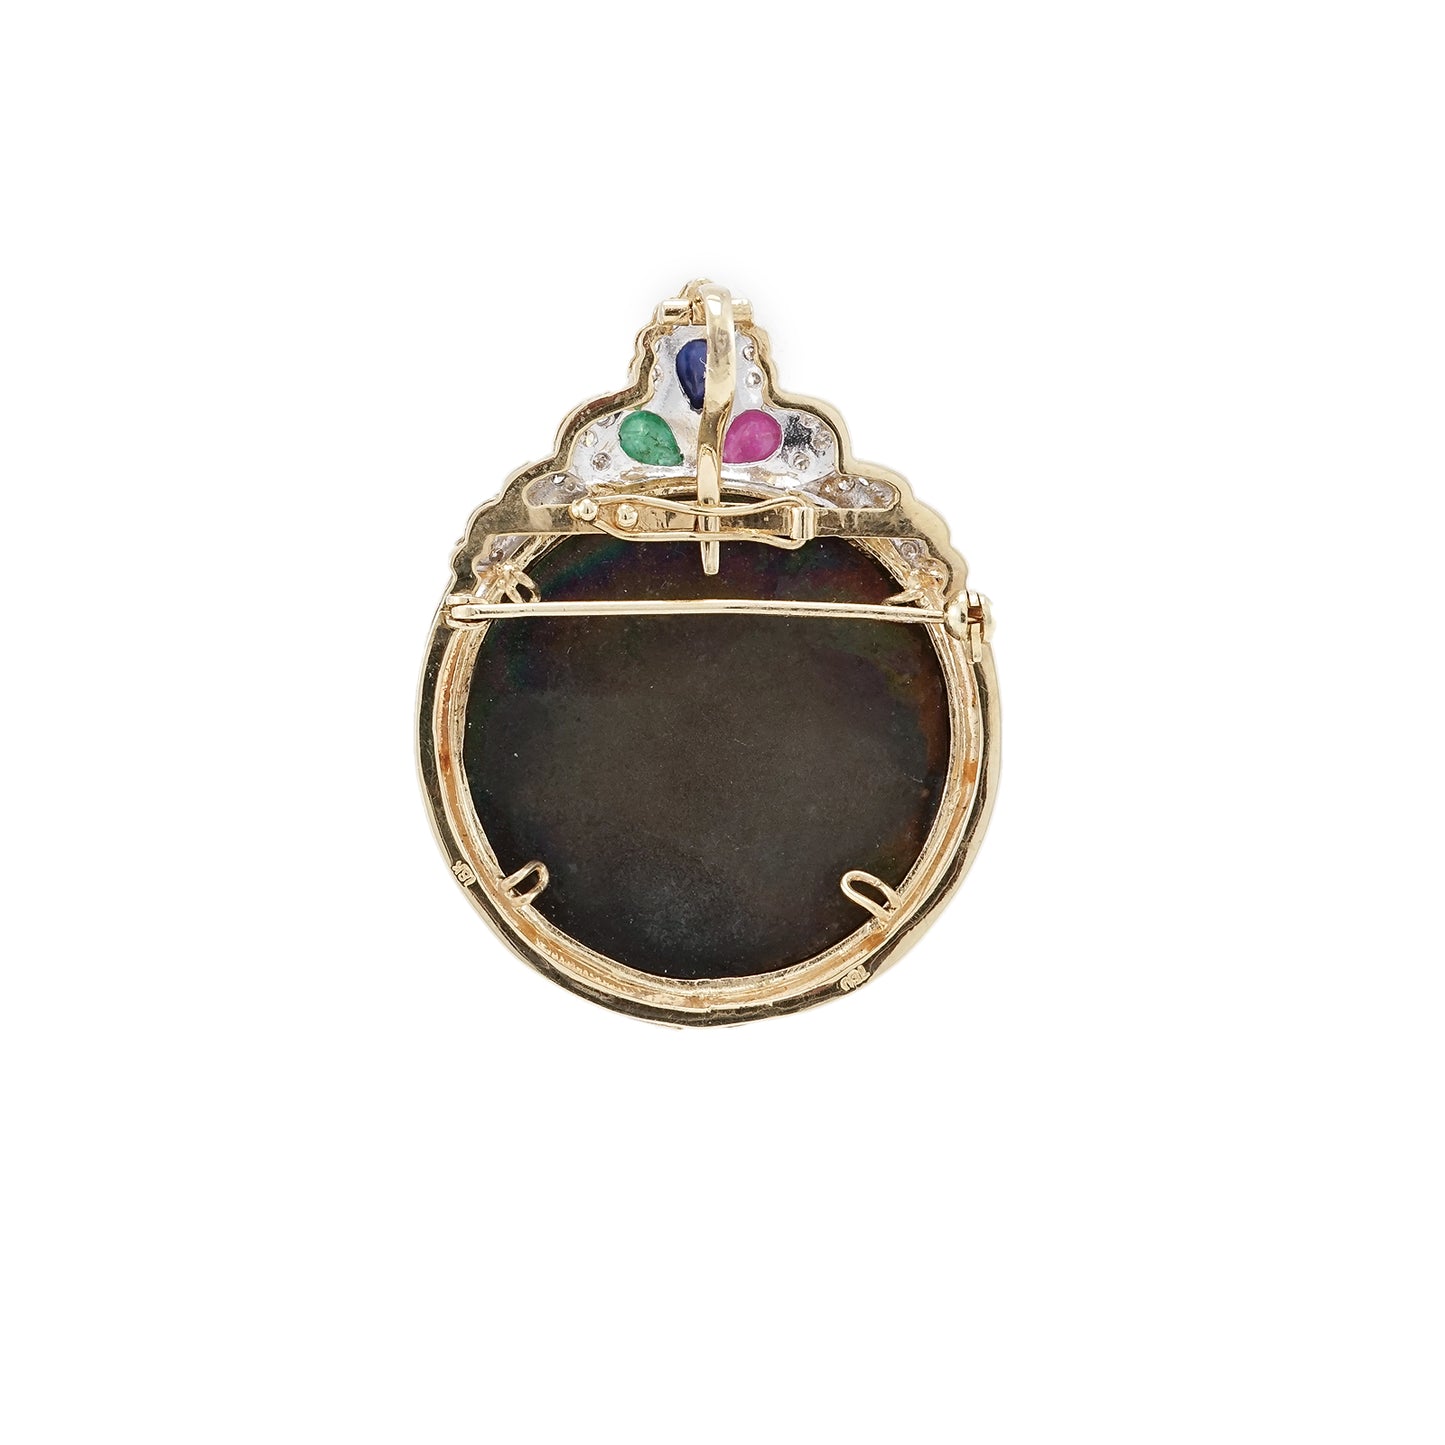 Vintage brooch pendant scorpion 750 yellow gold gemstone jewelry old cut diamond